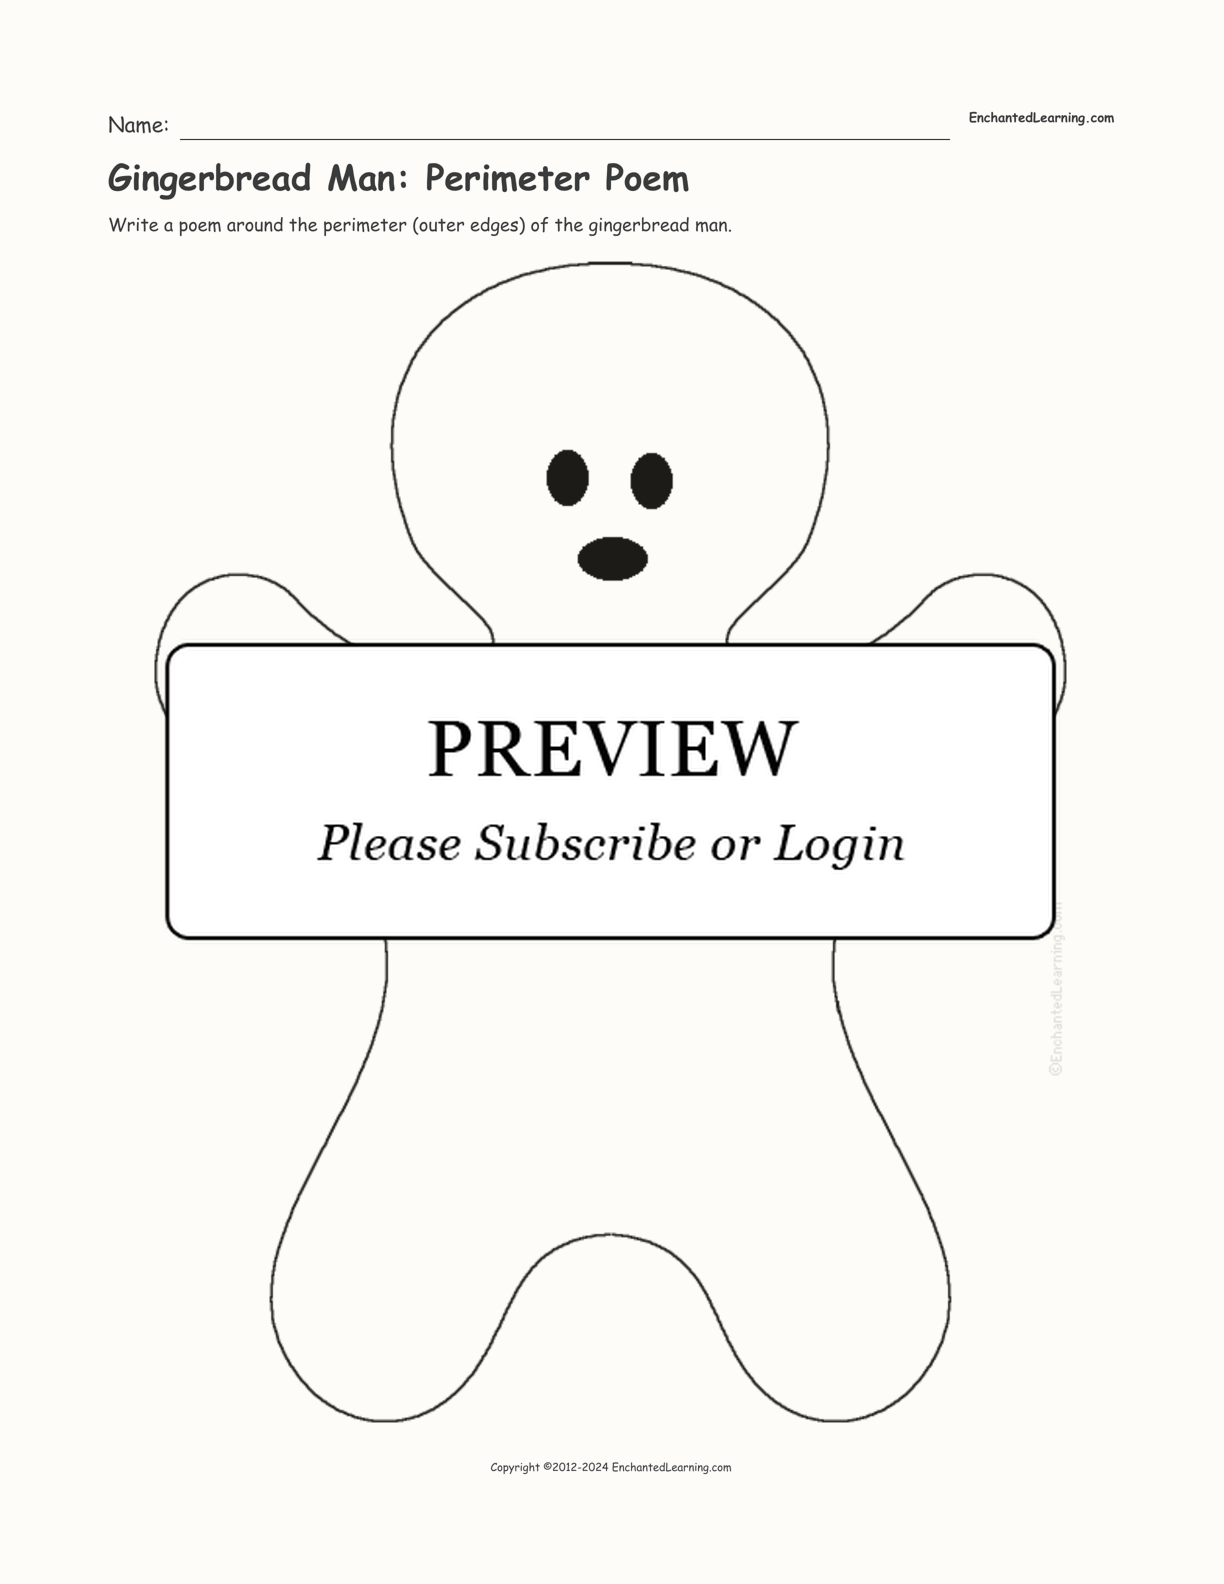 Gingerbread Man: Perimeter Poem interactive worksheet page 1